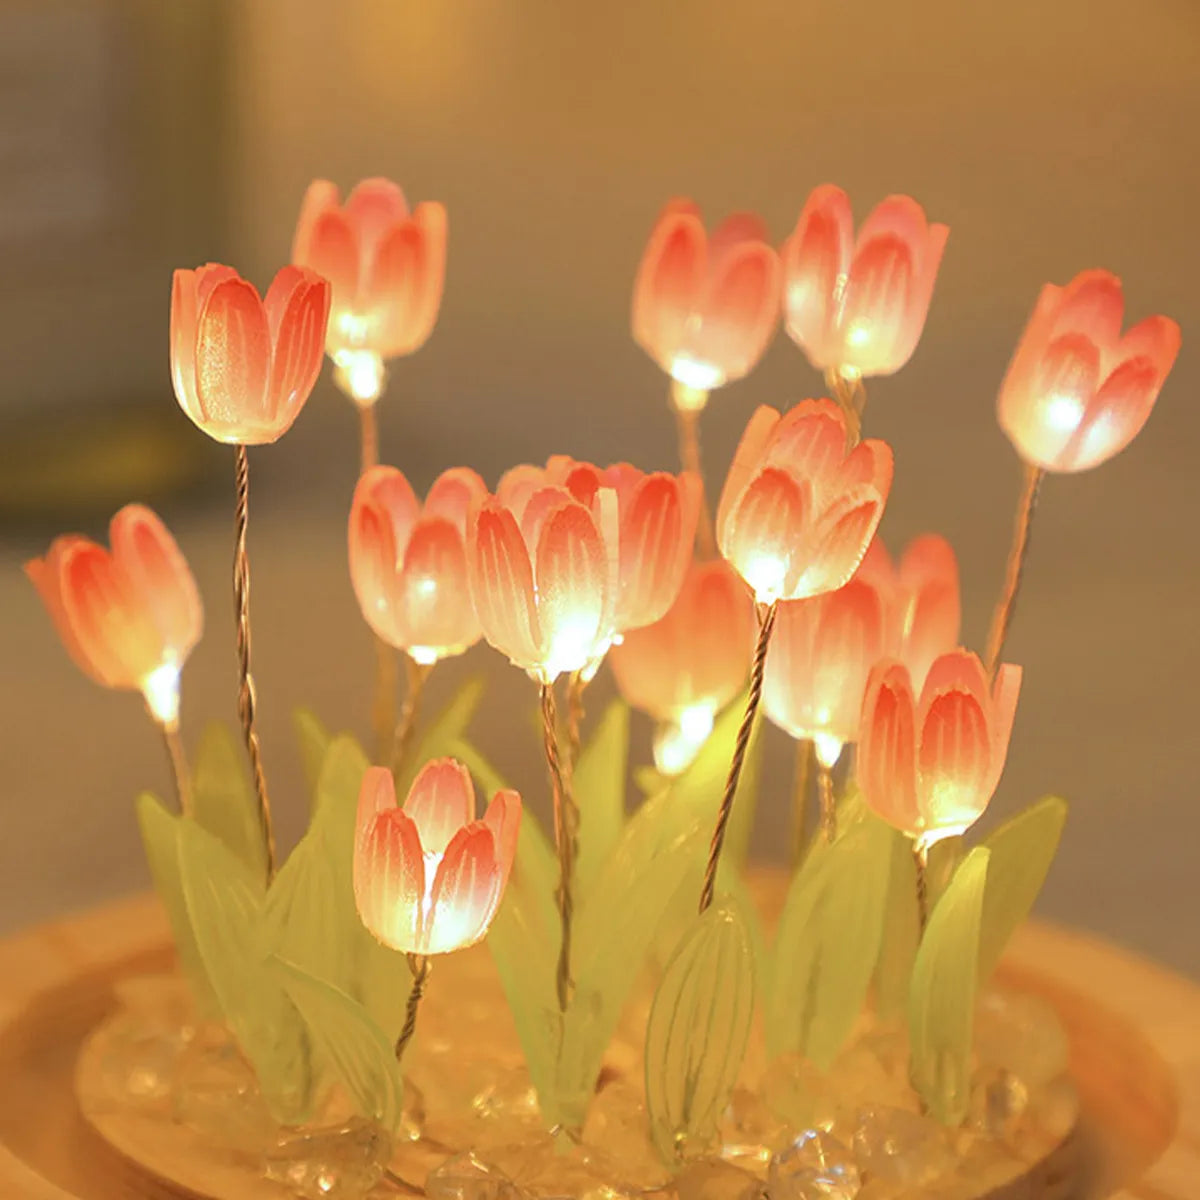 Tulip Night Light: DIY Simulation, Battery-Operated Lamp